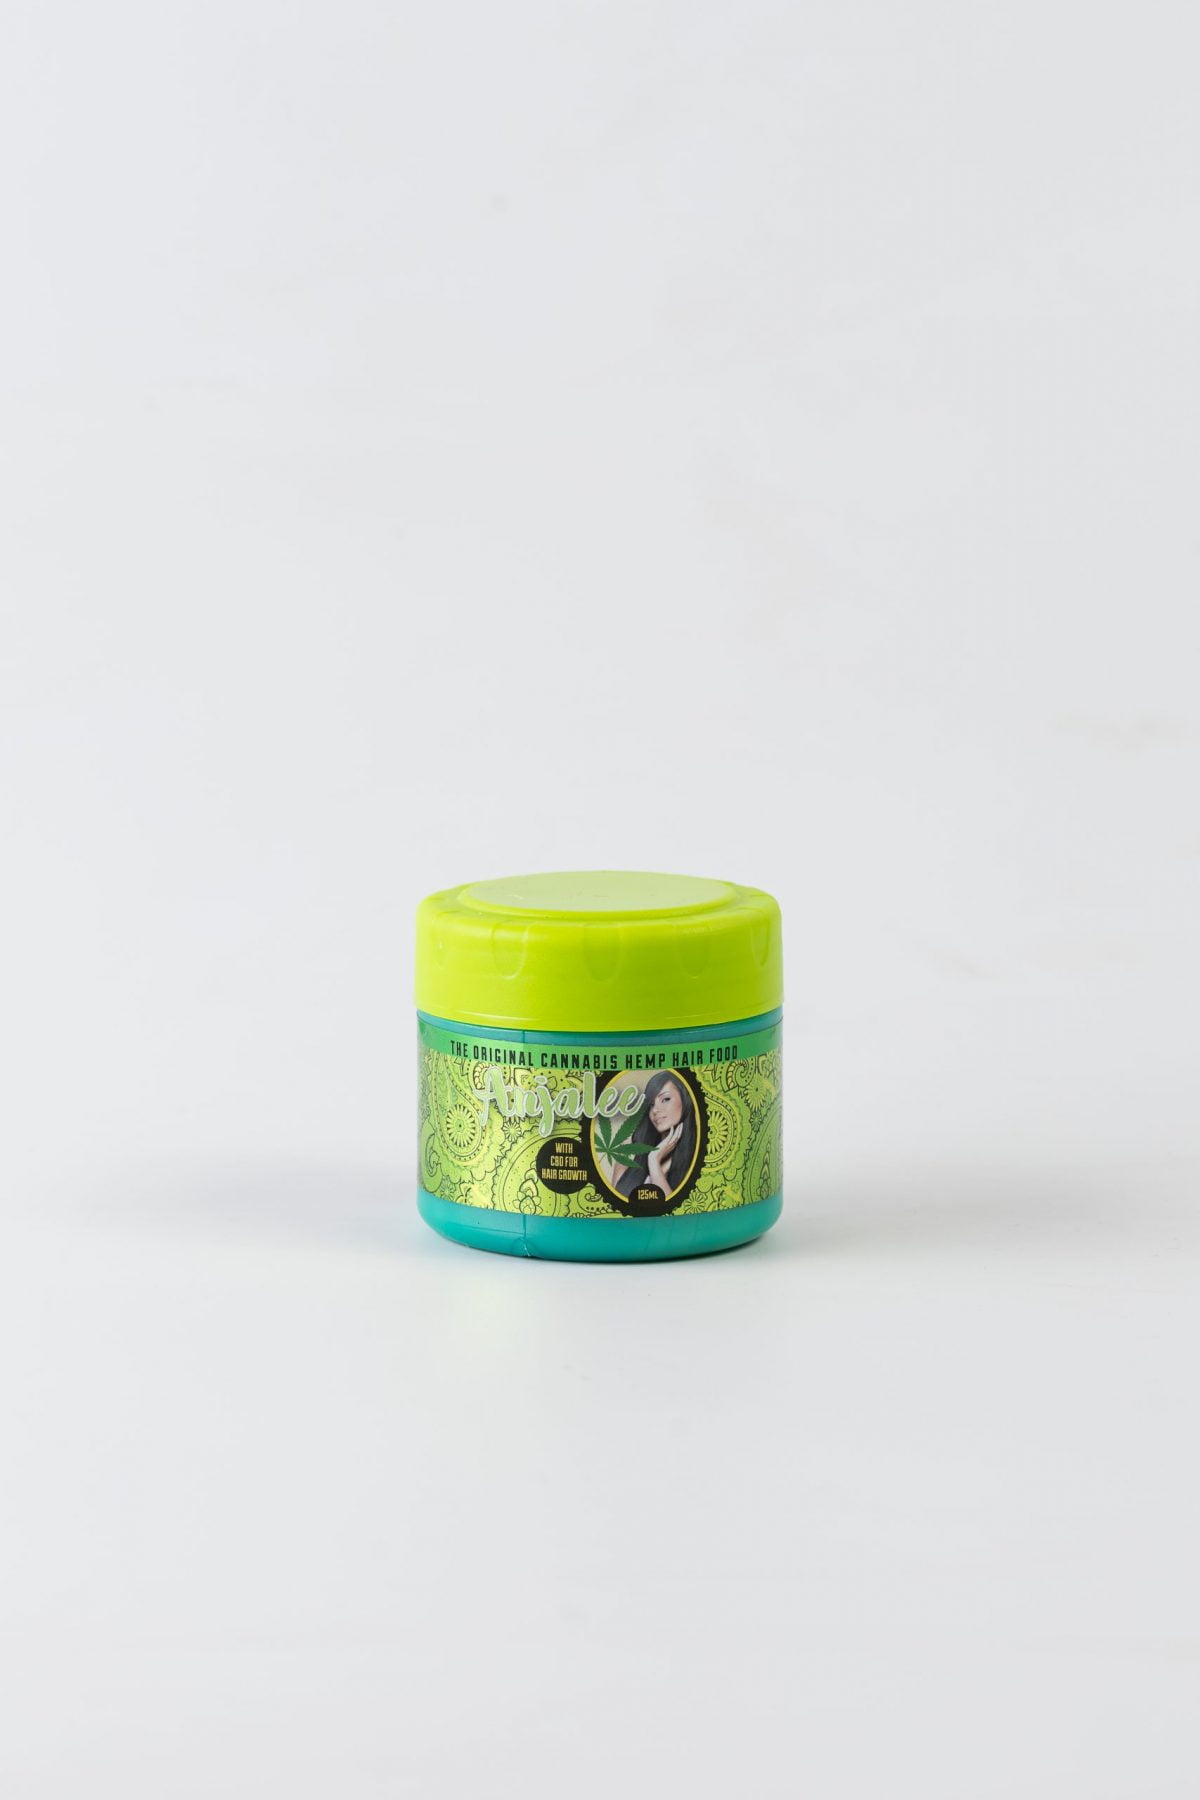 Anjalee Original Cannabis HEMP Hair Food (CBD) 50ml